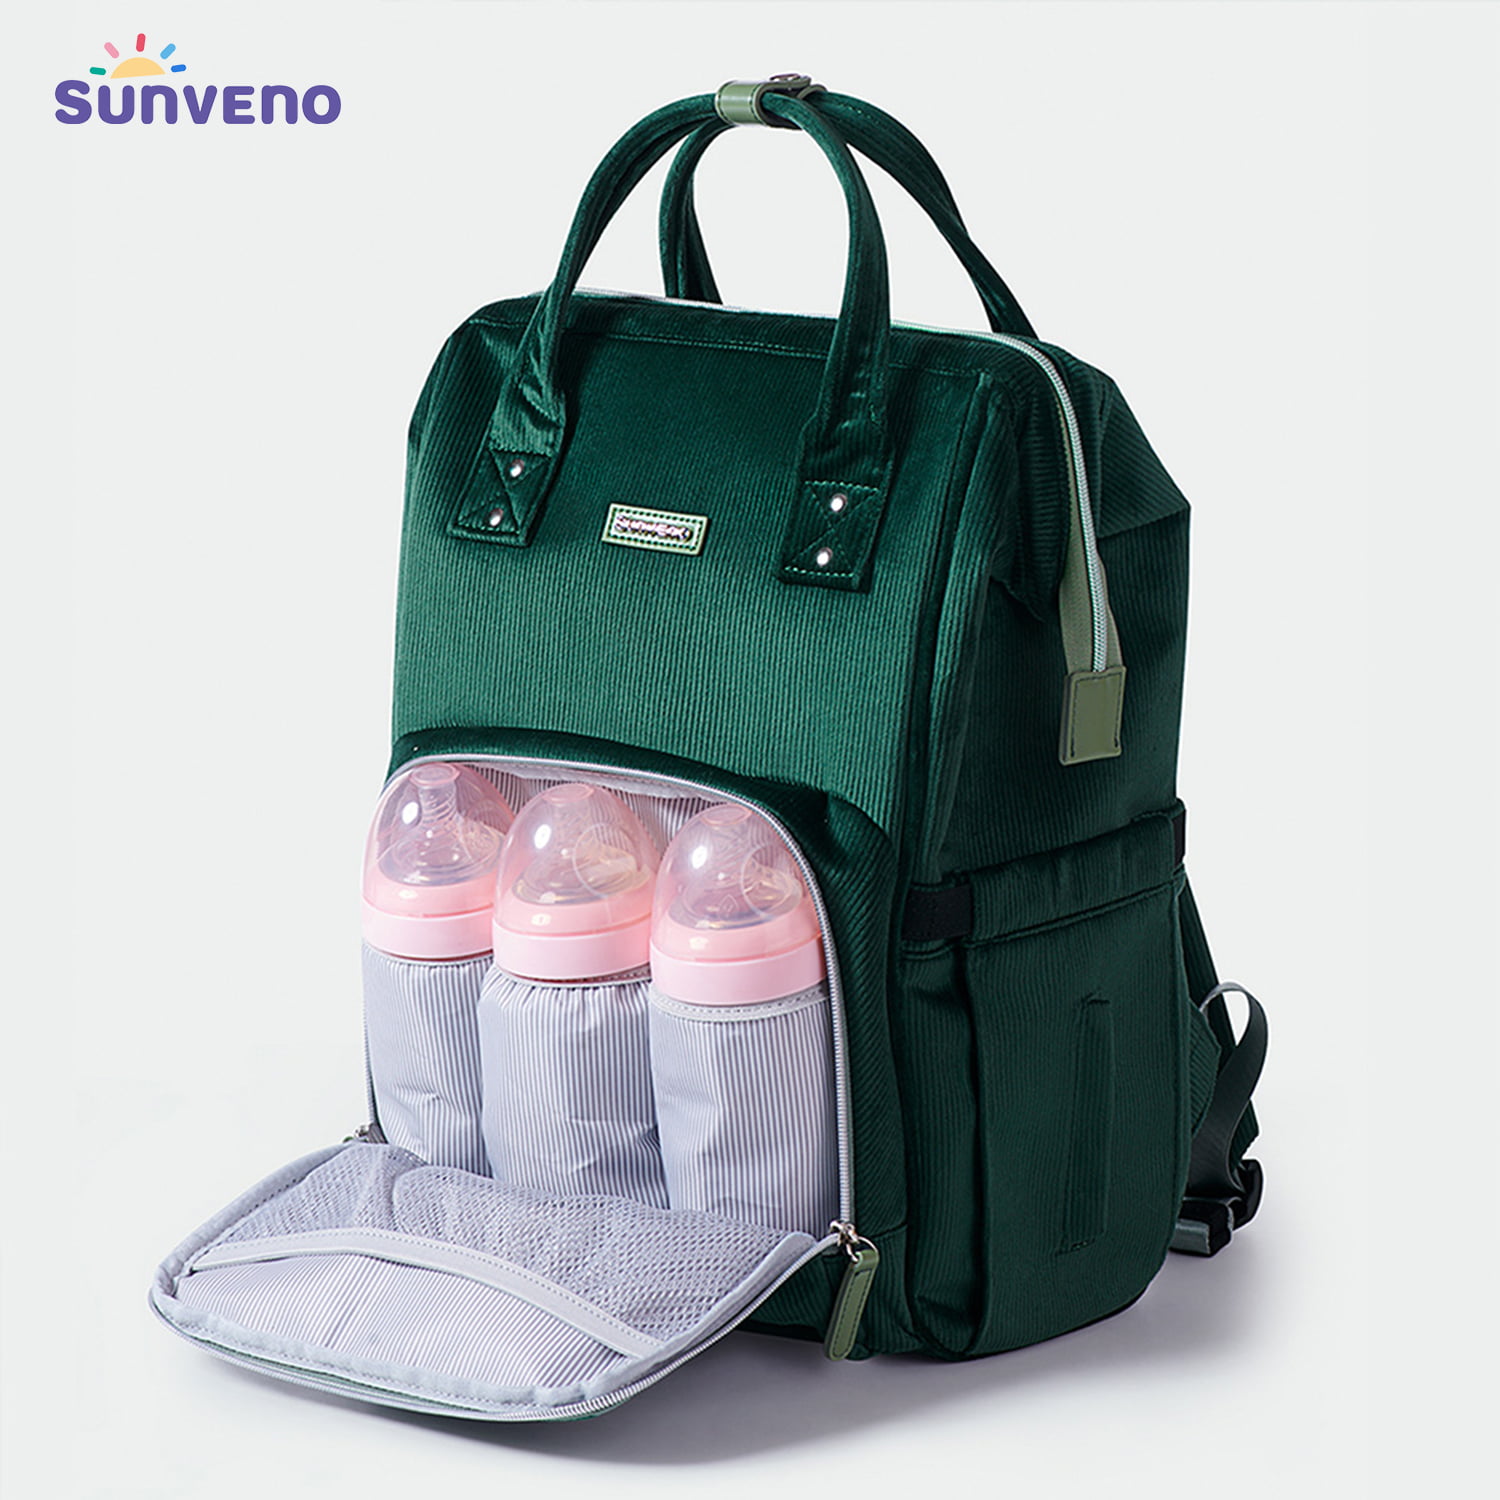 Sunveno Travel Stroller Bag Large Capacity Multifunctional 